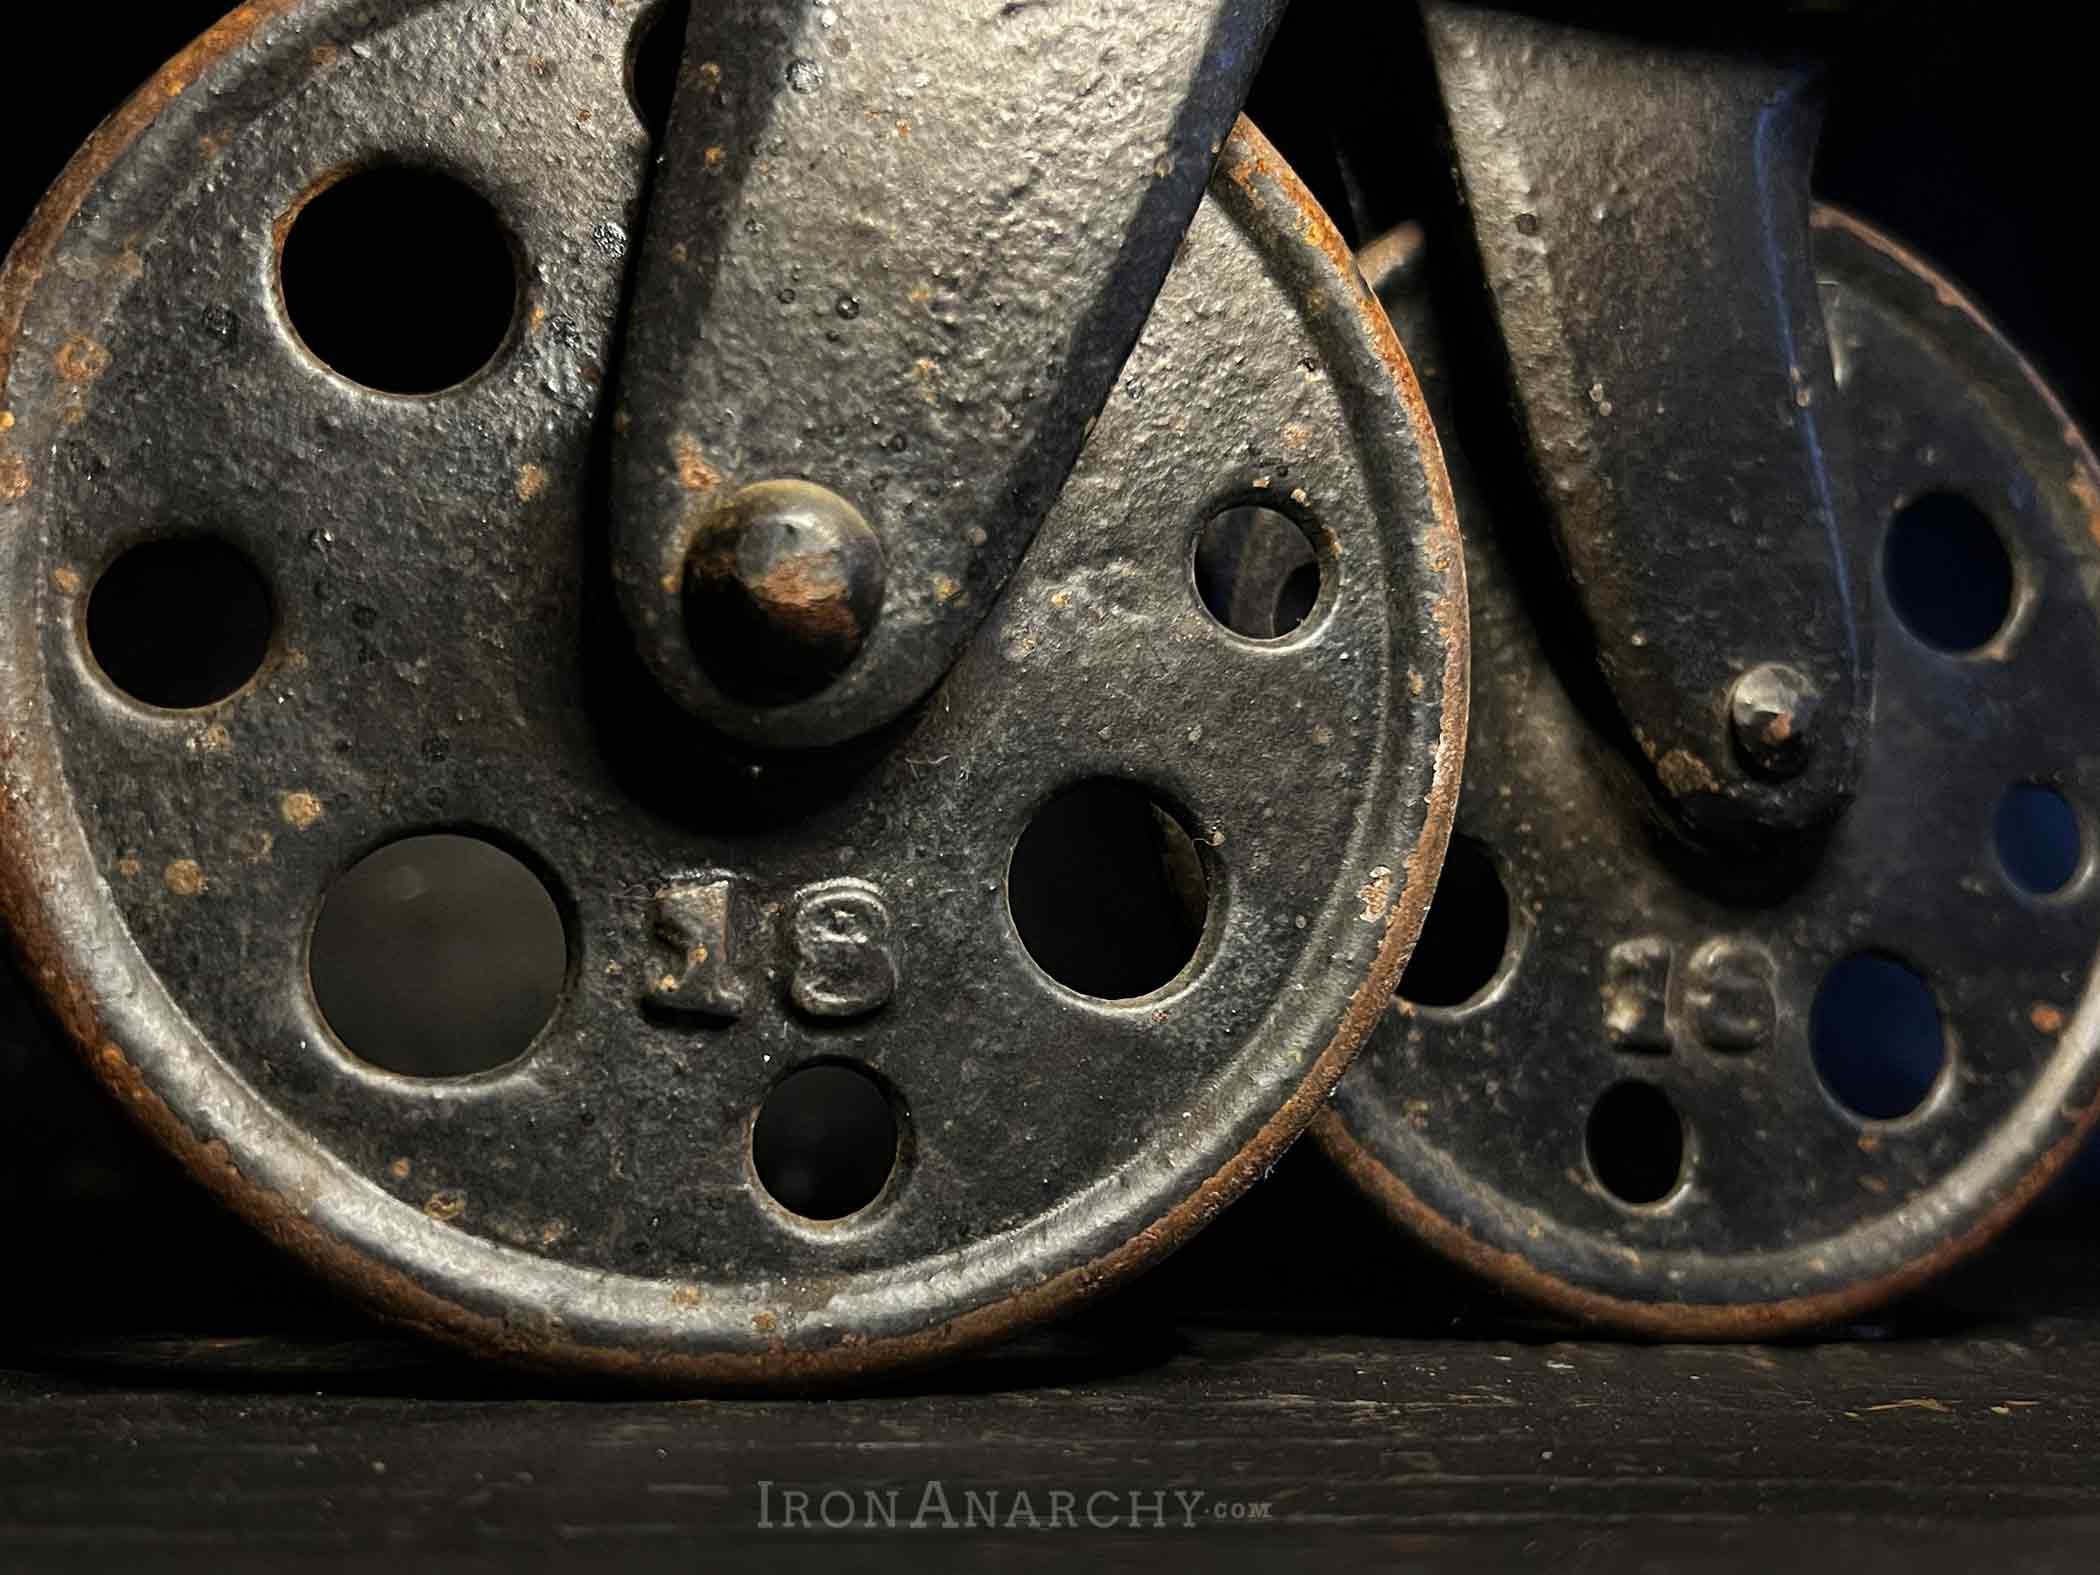 Antique Industrial Factory Cart Caster Wheels